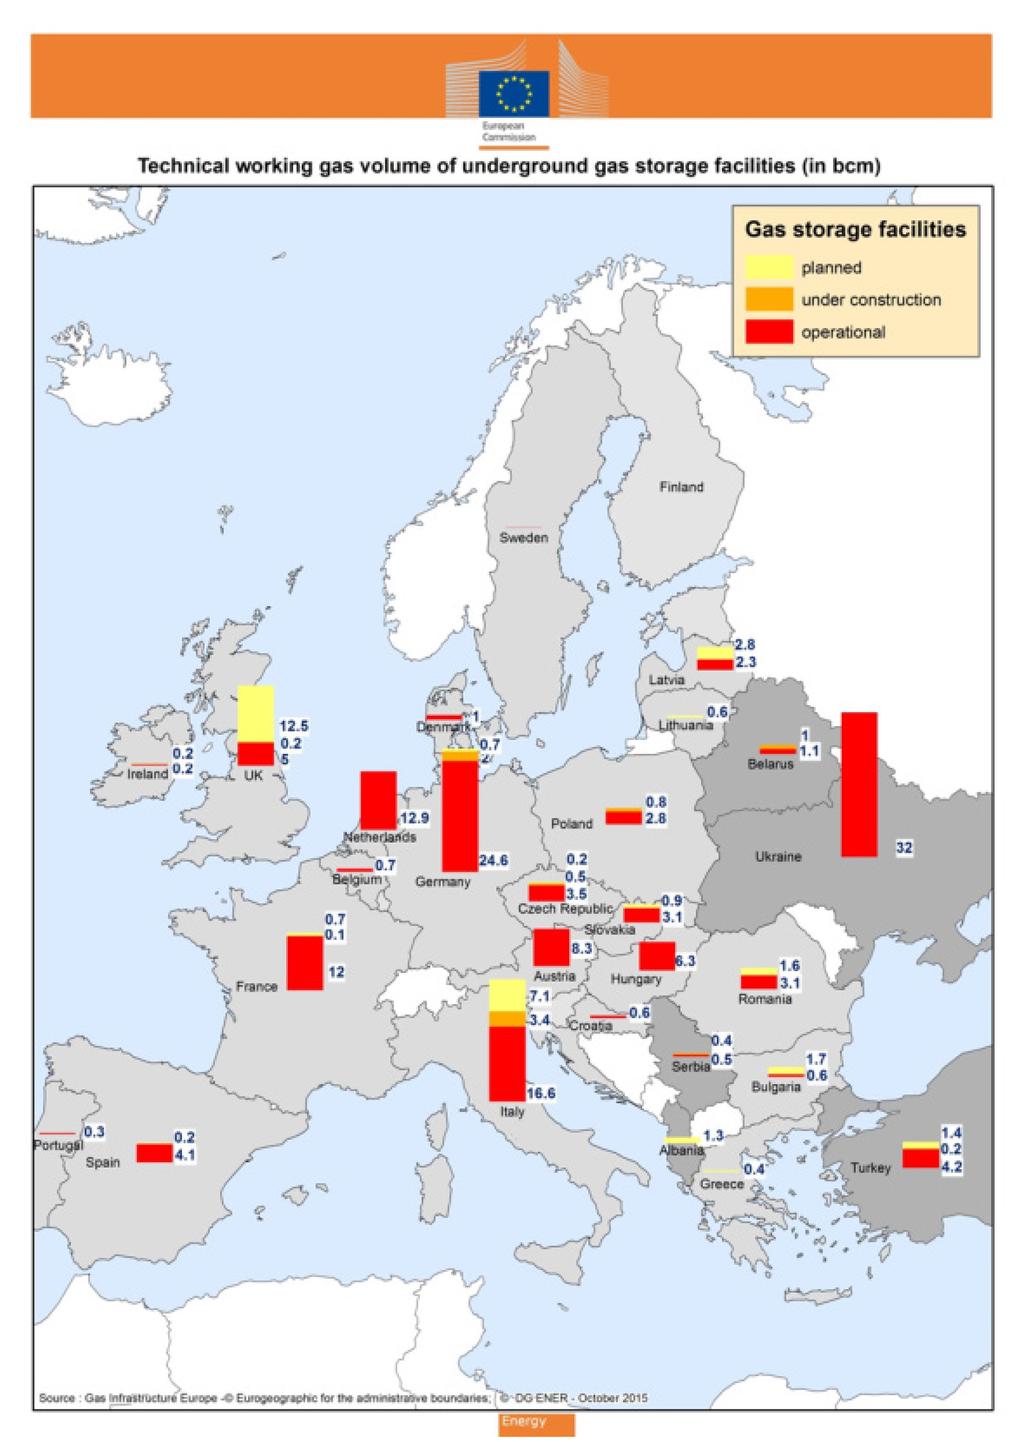 5. EU gas storage facilities and